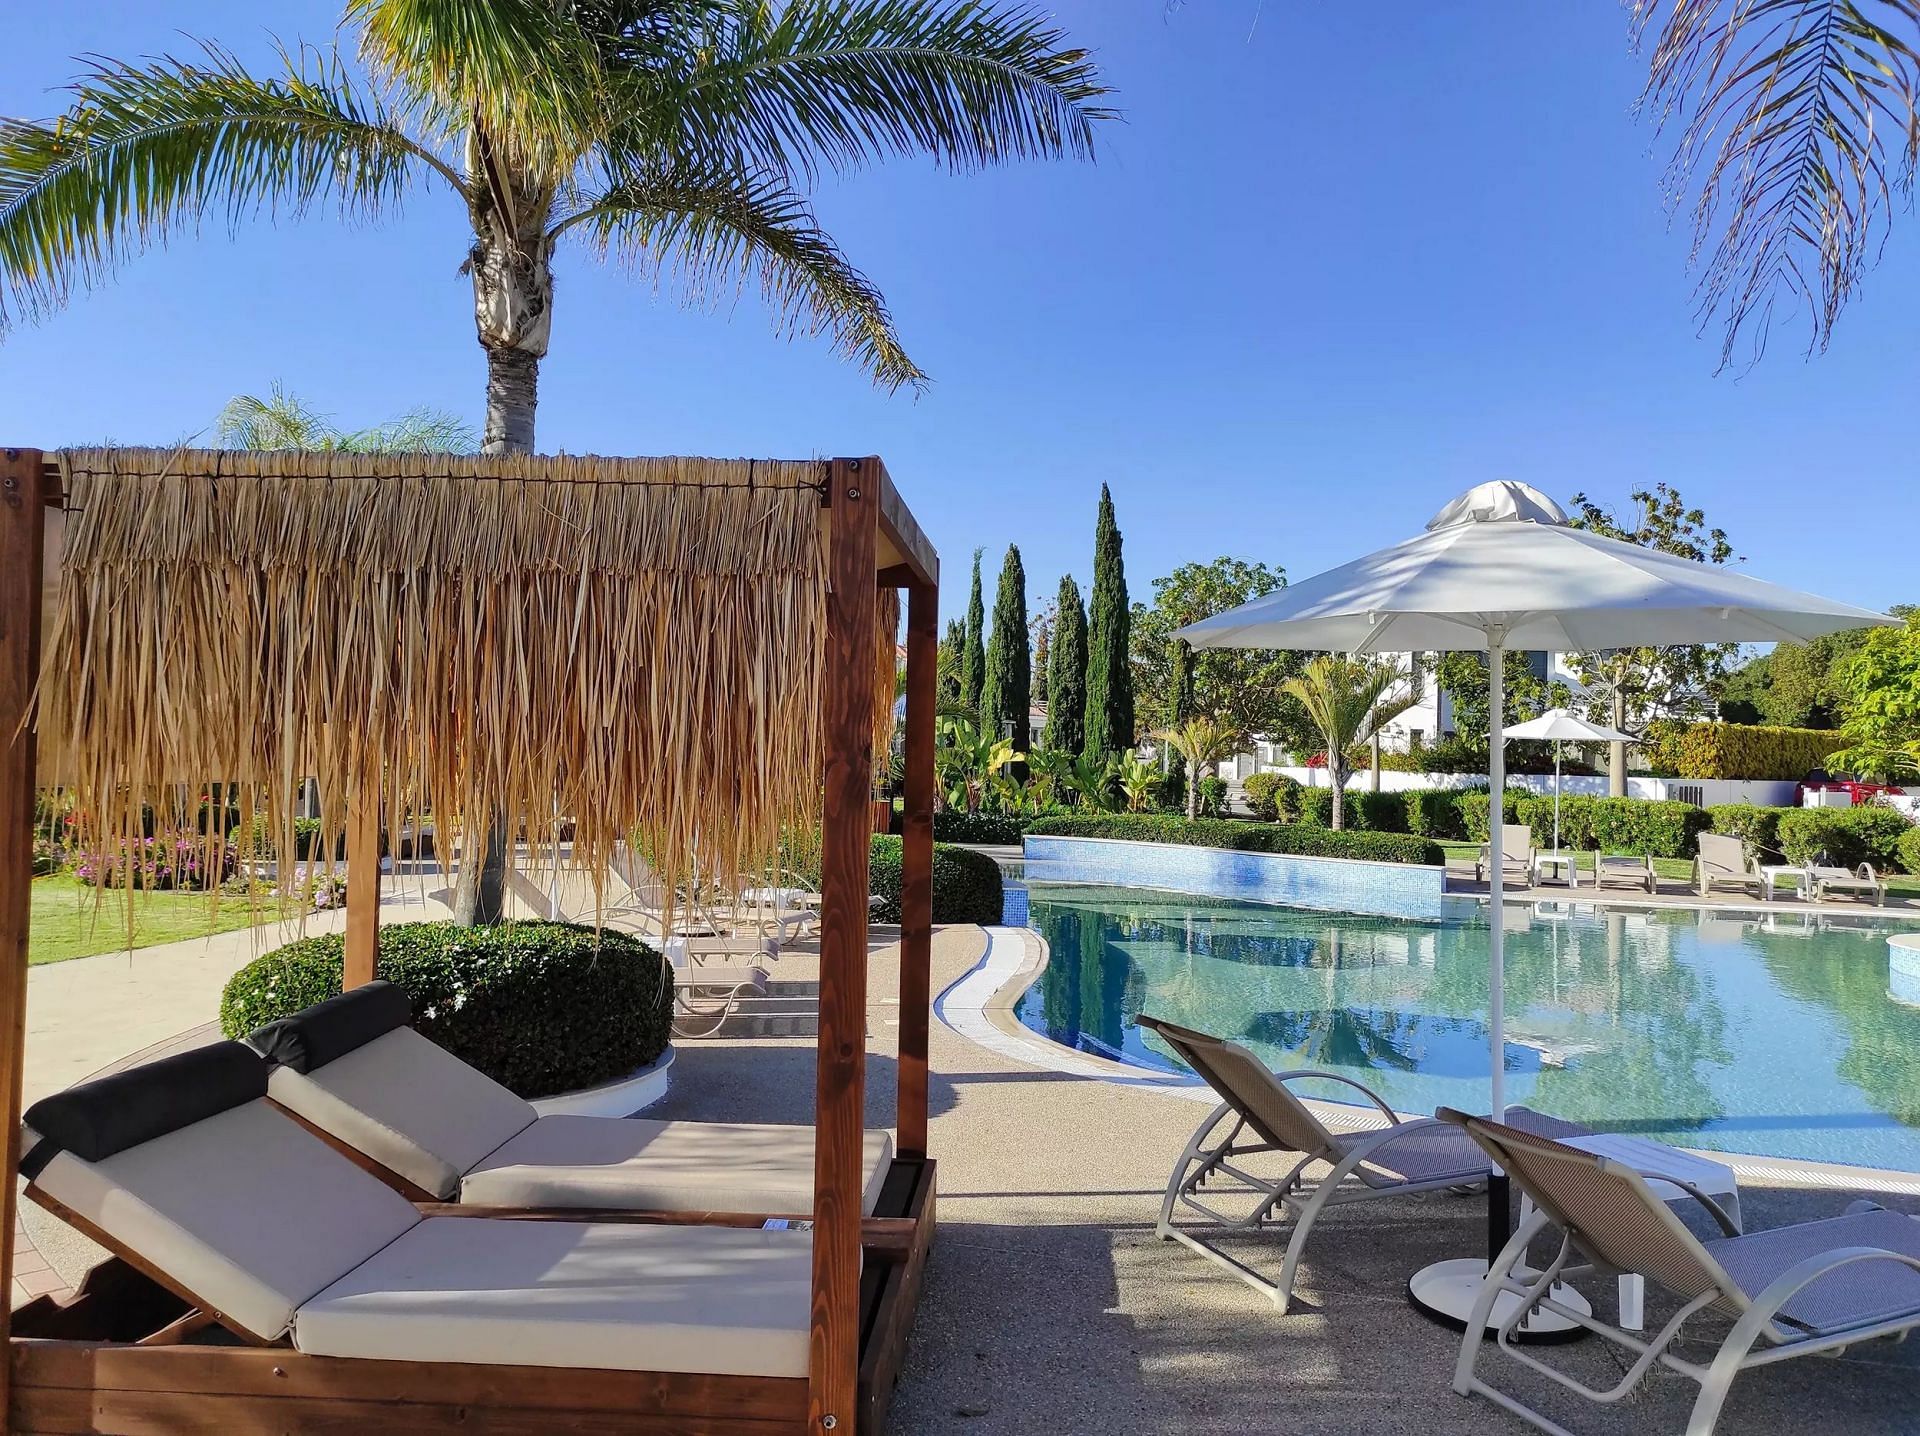 Atlantis Gardens Resort in Larnaca, Cyprus (Image via Atlantis Gardens website)